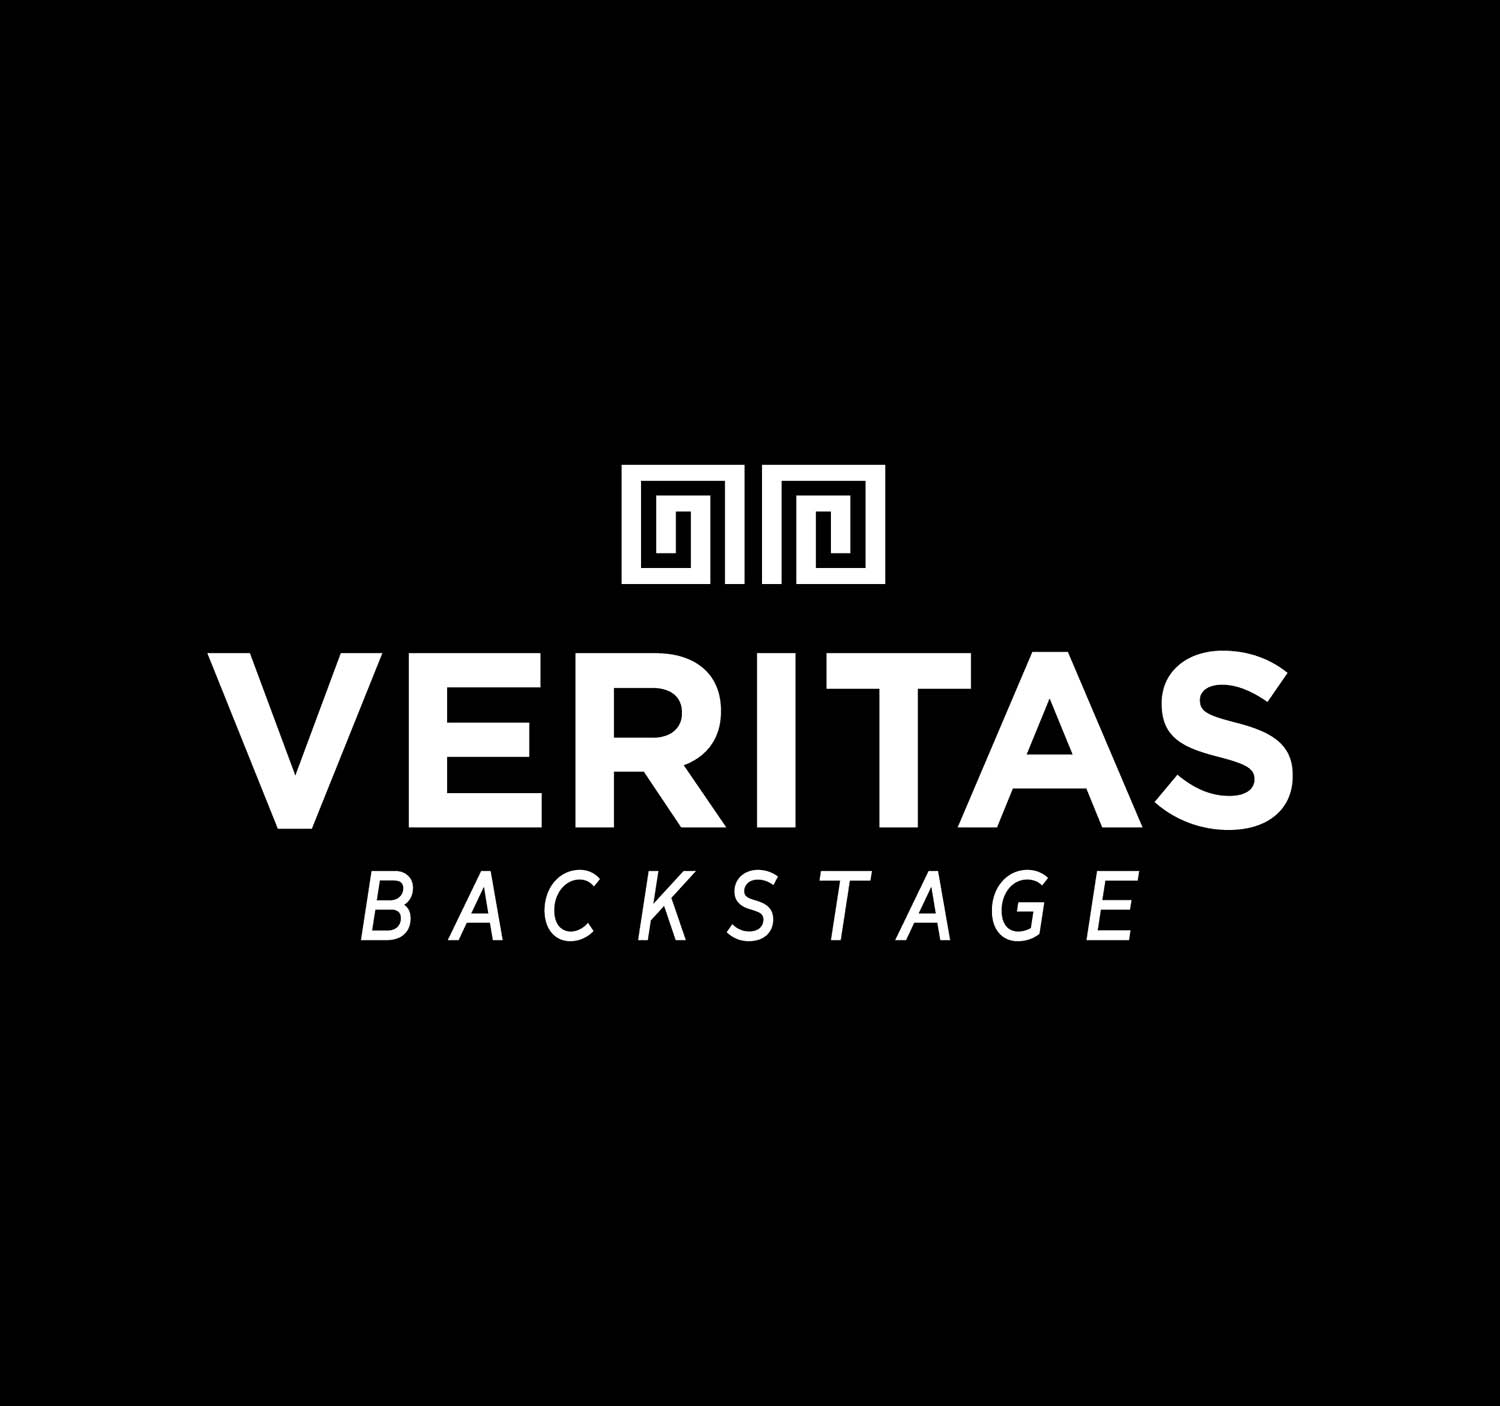 Veritas Backstage